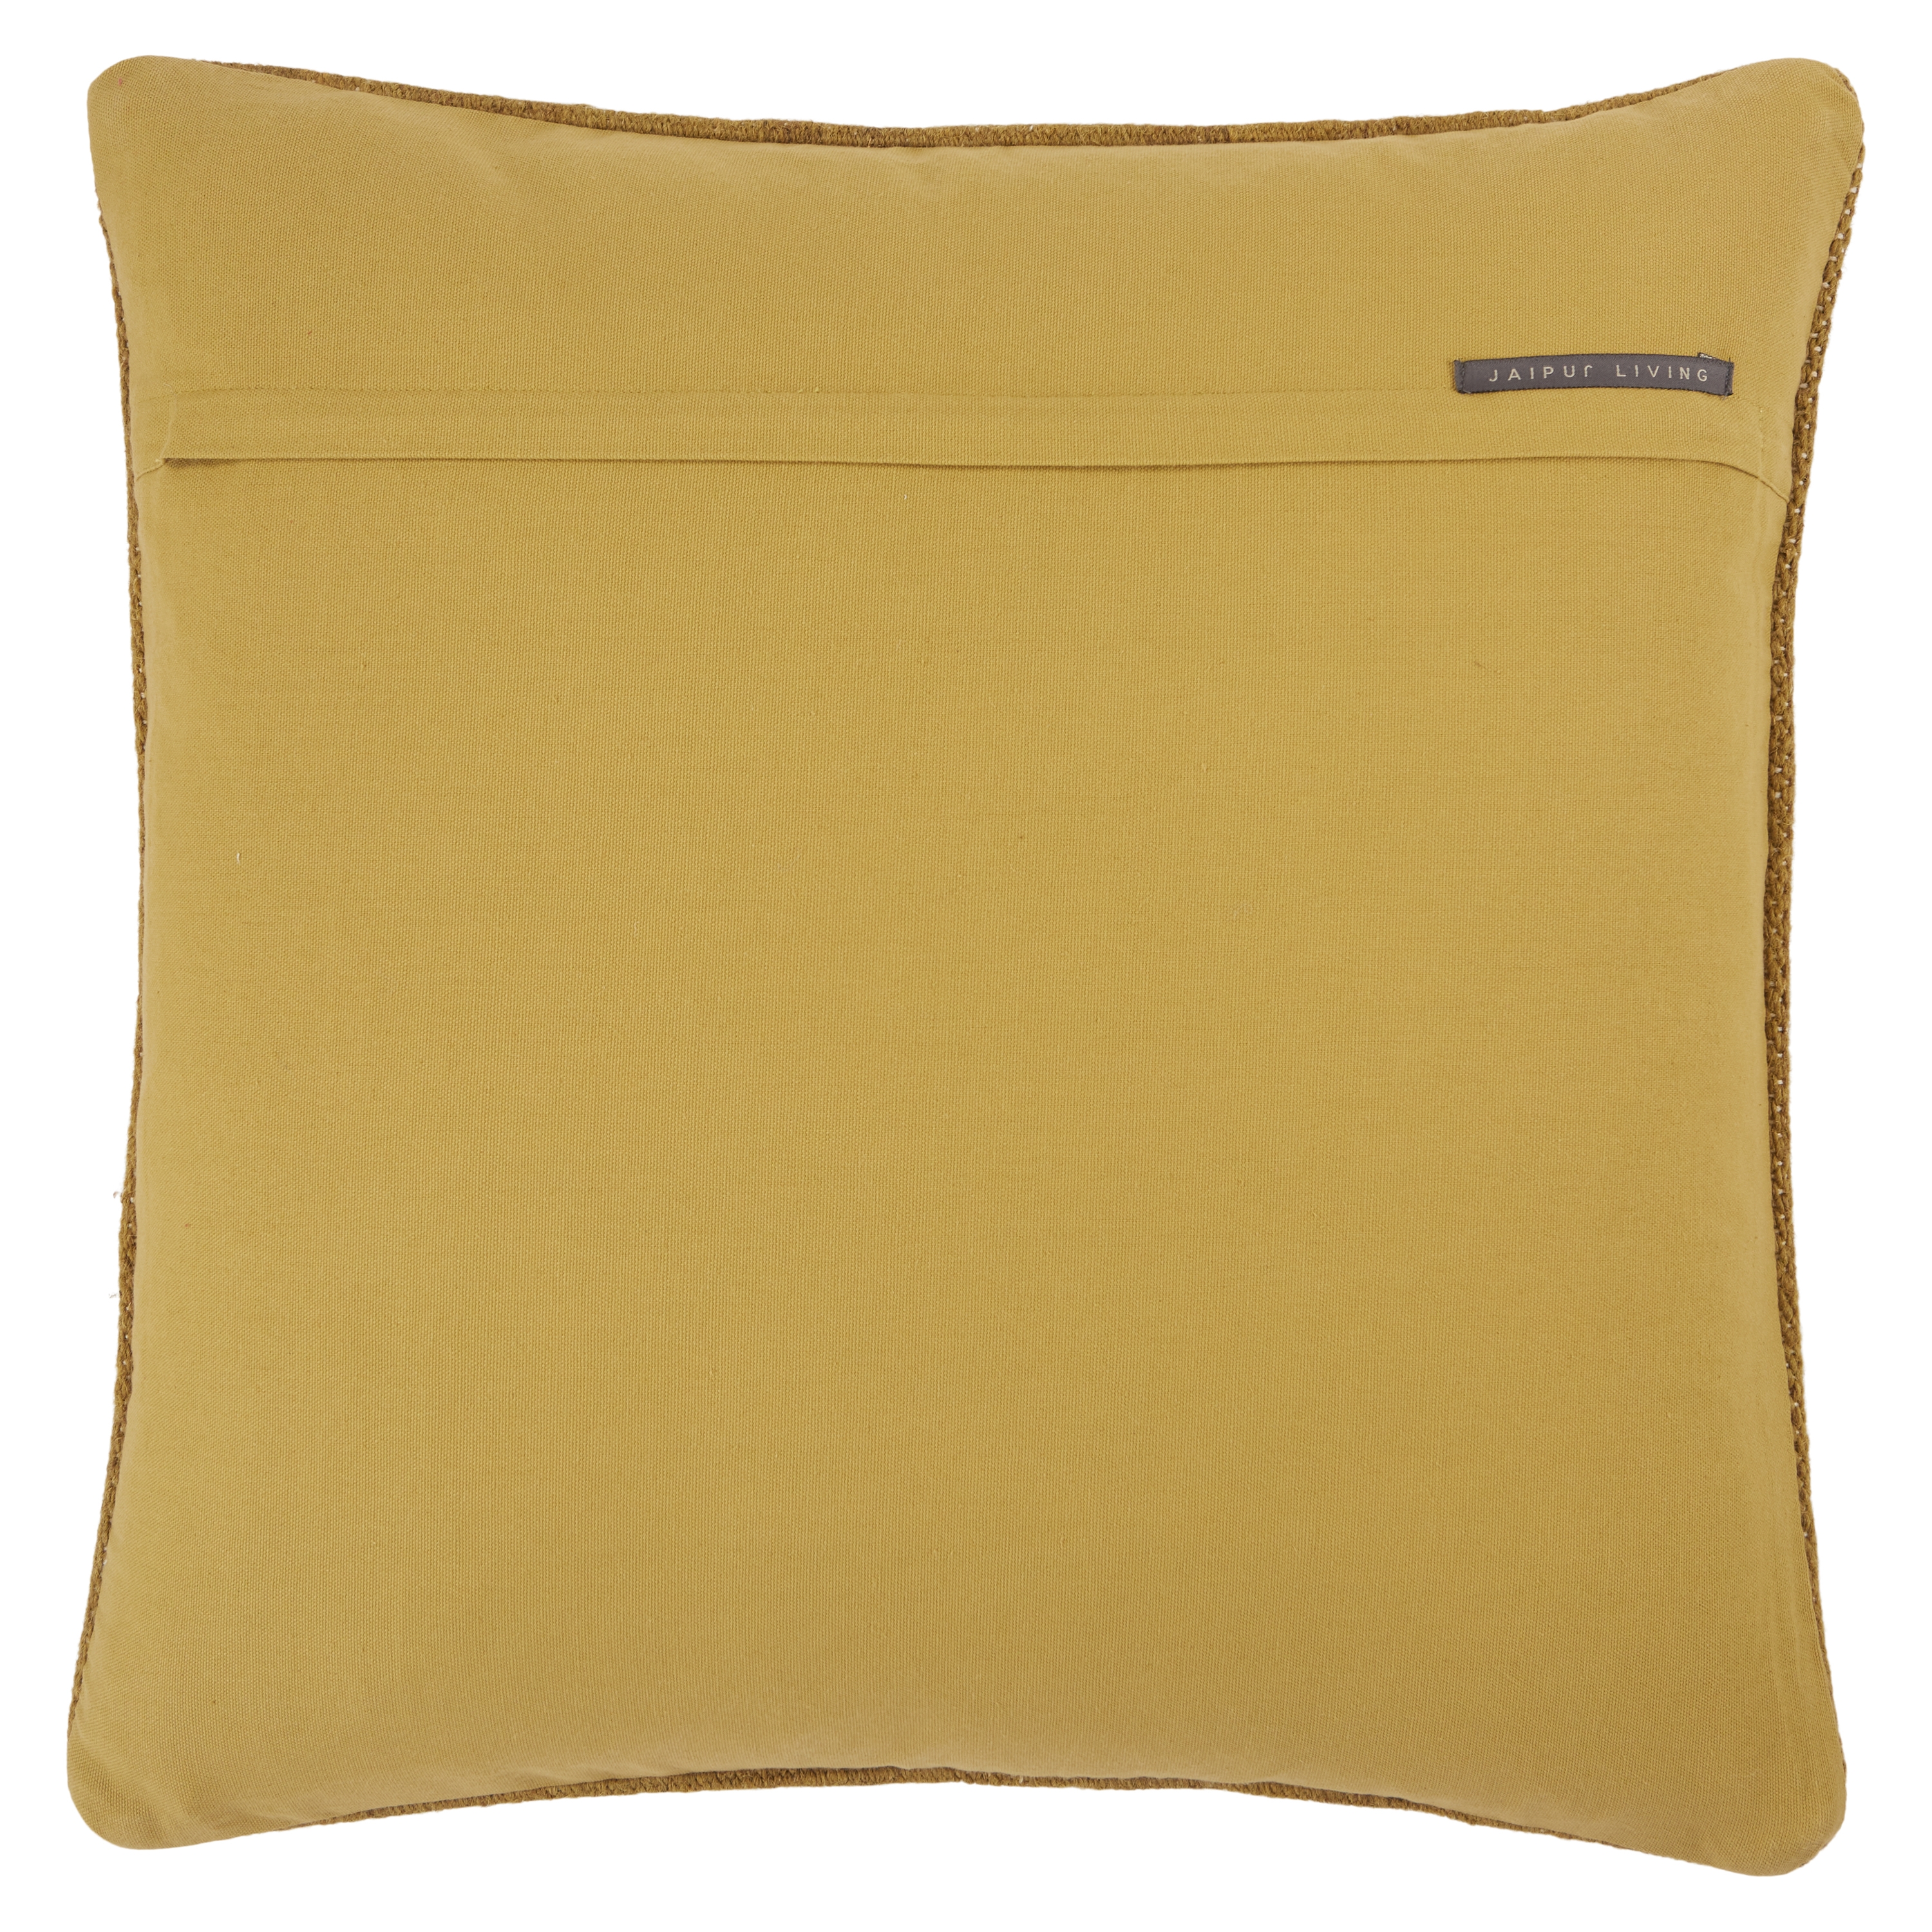 Design (US) Gold 22"X22" Pillow - Image 1